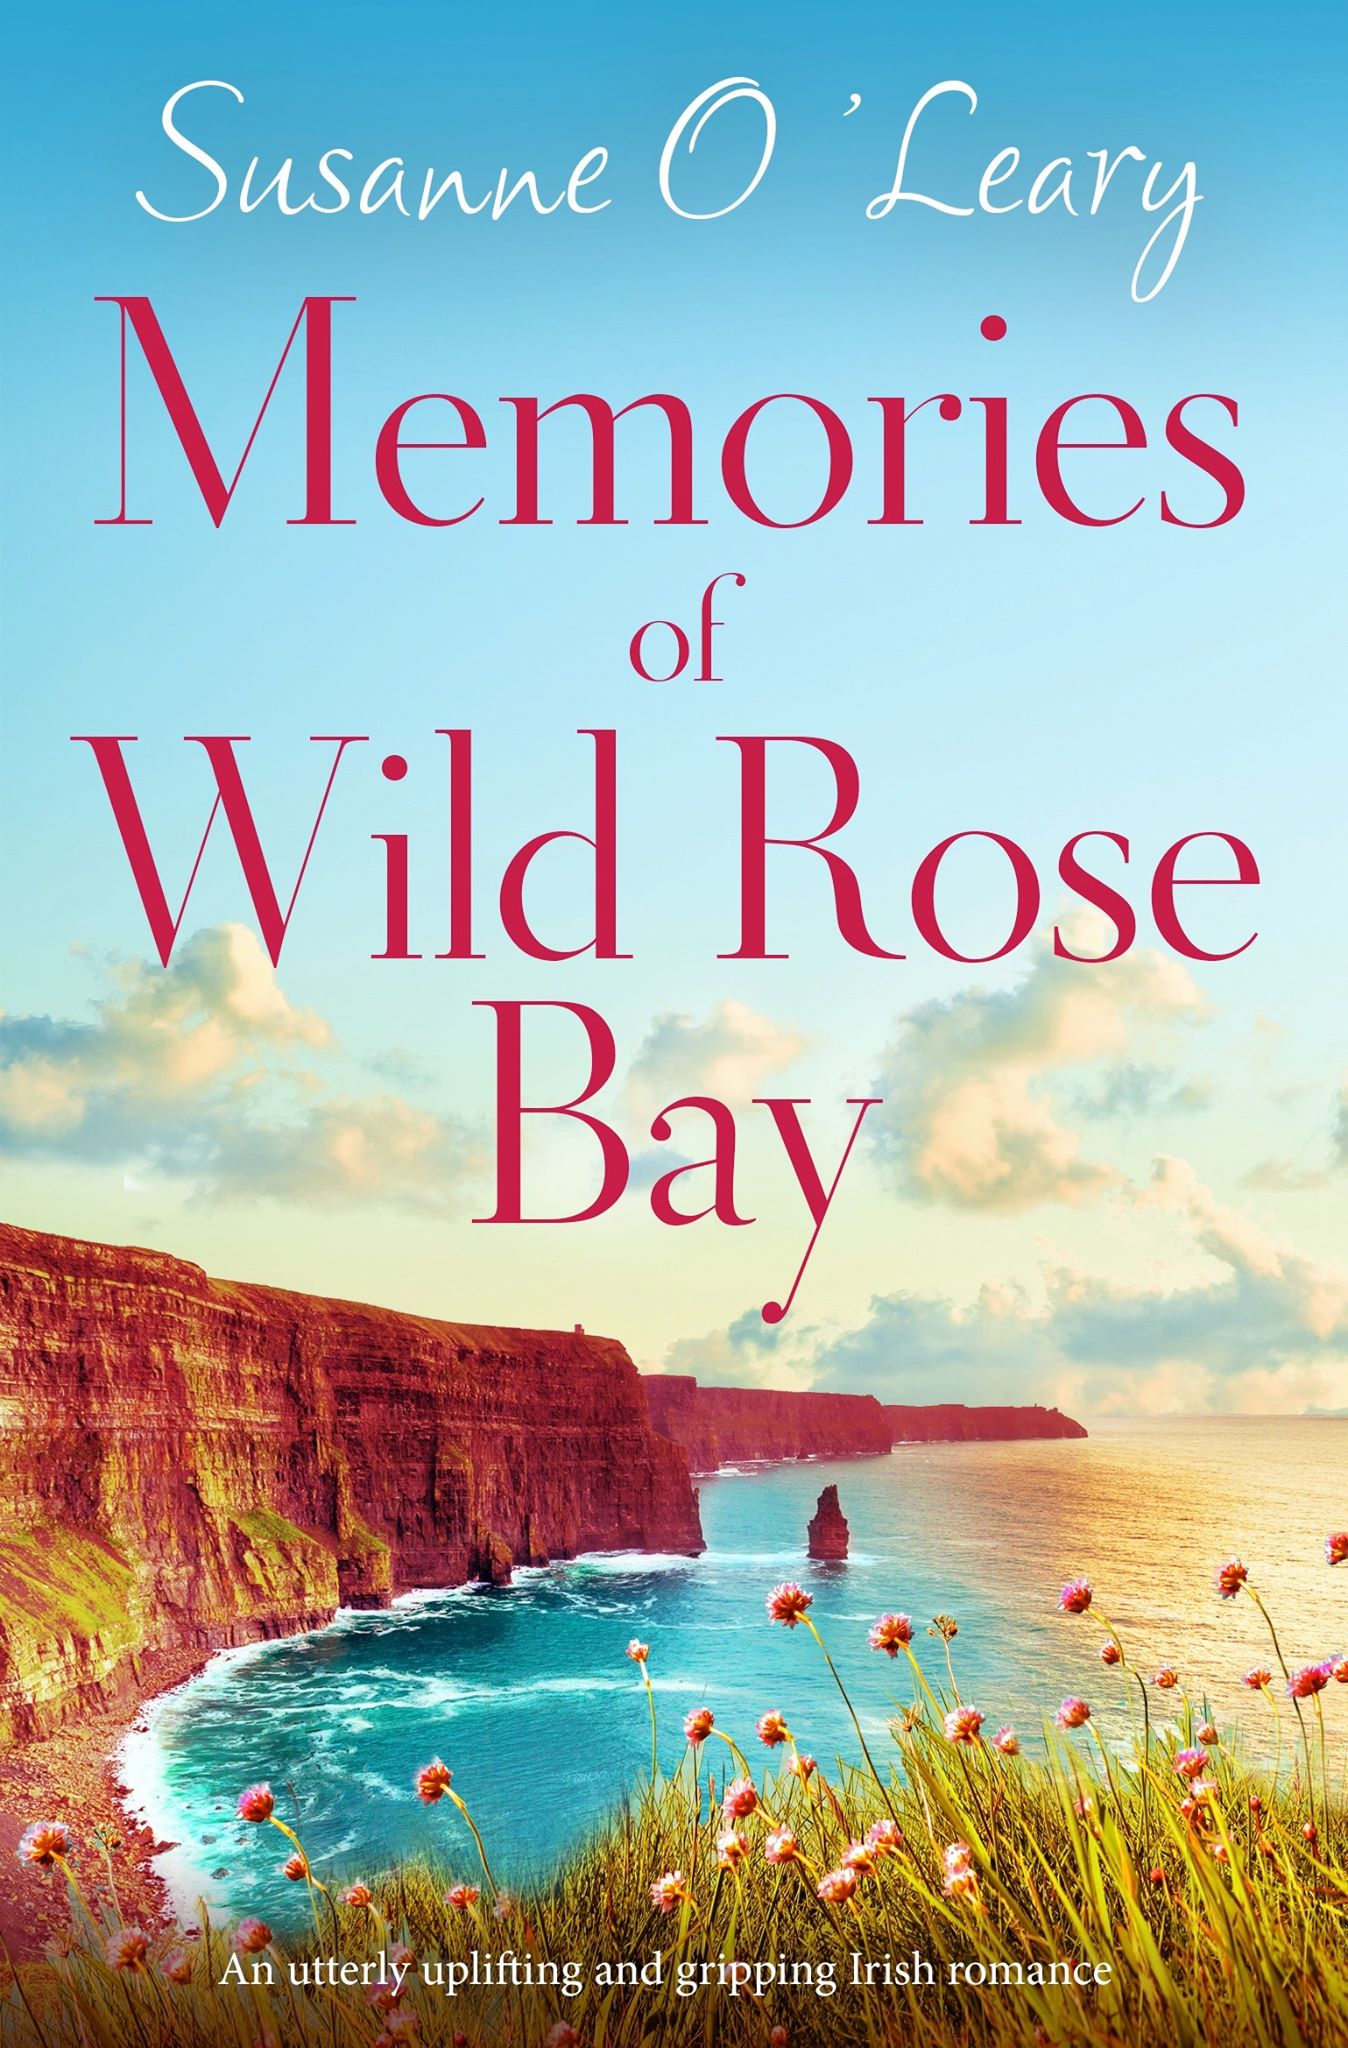 Memories of Wild Rose Bay